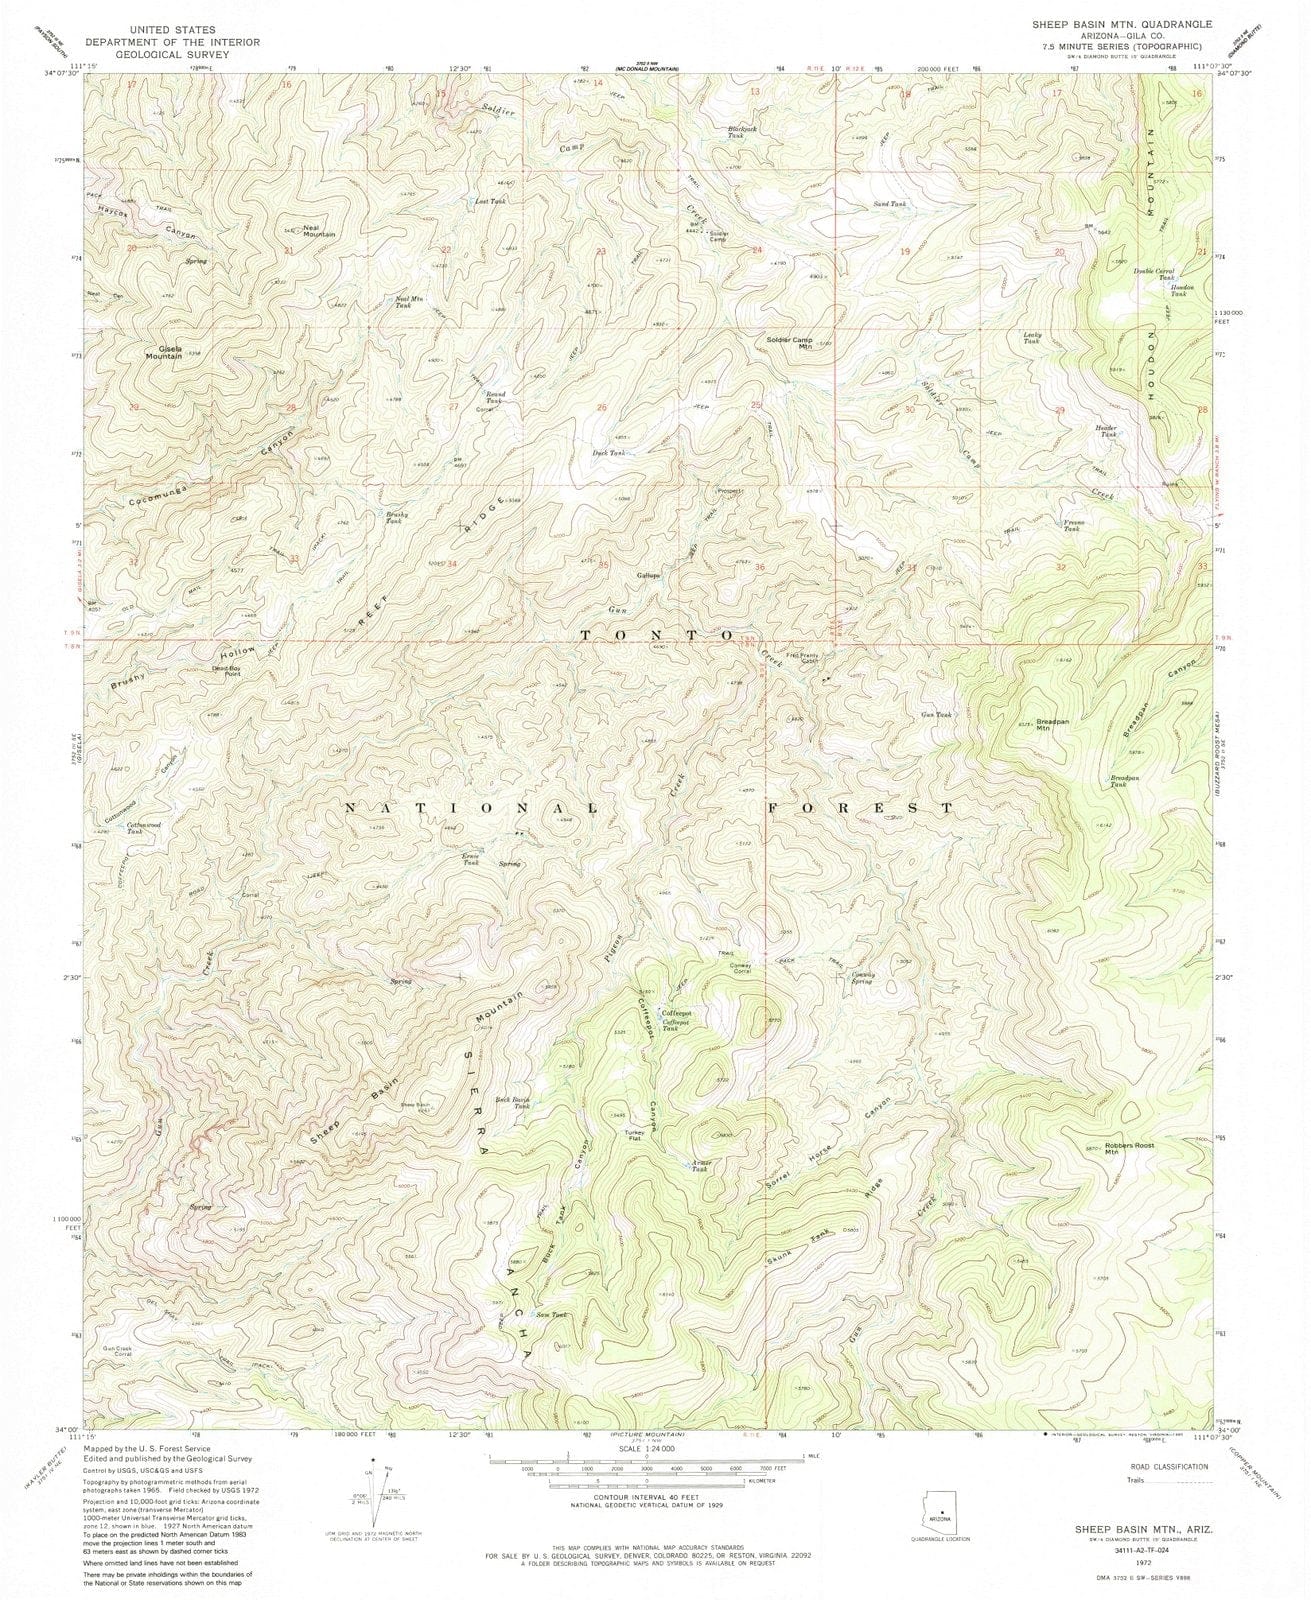 1972 Sheep Basin MTN, AZ - Arizona - USGS Topographic Map